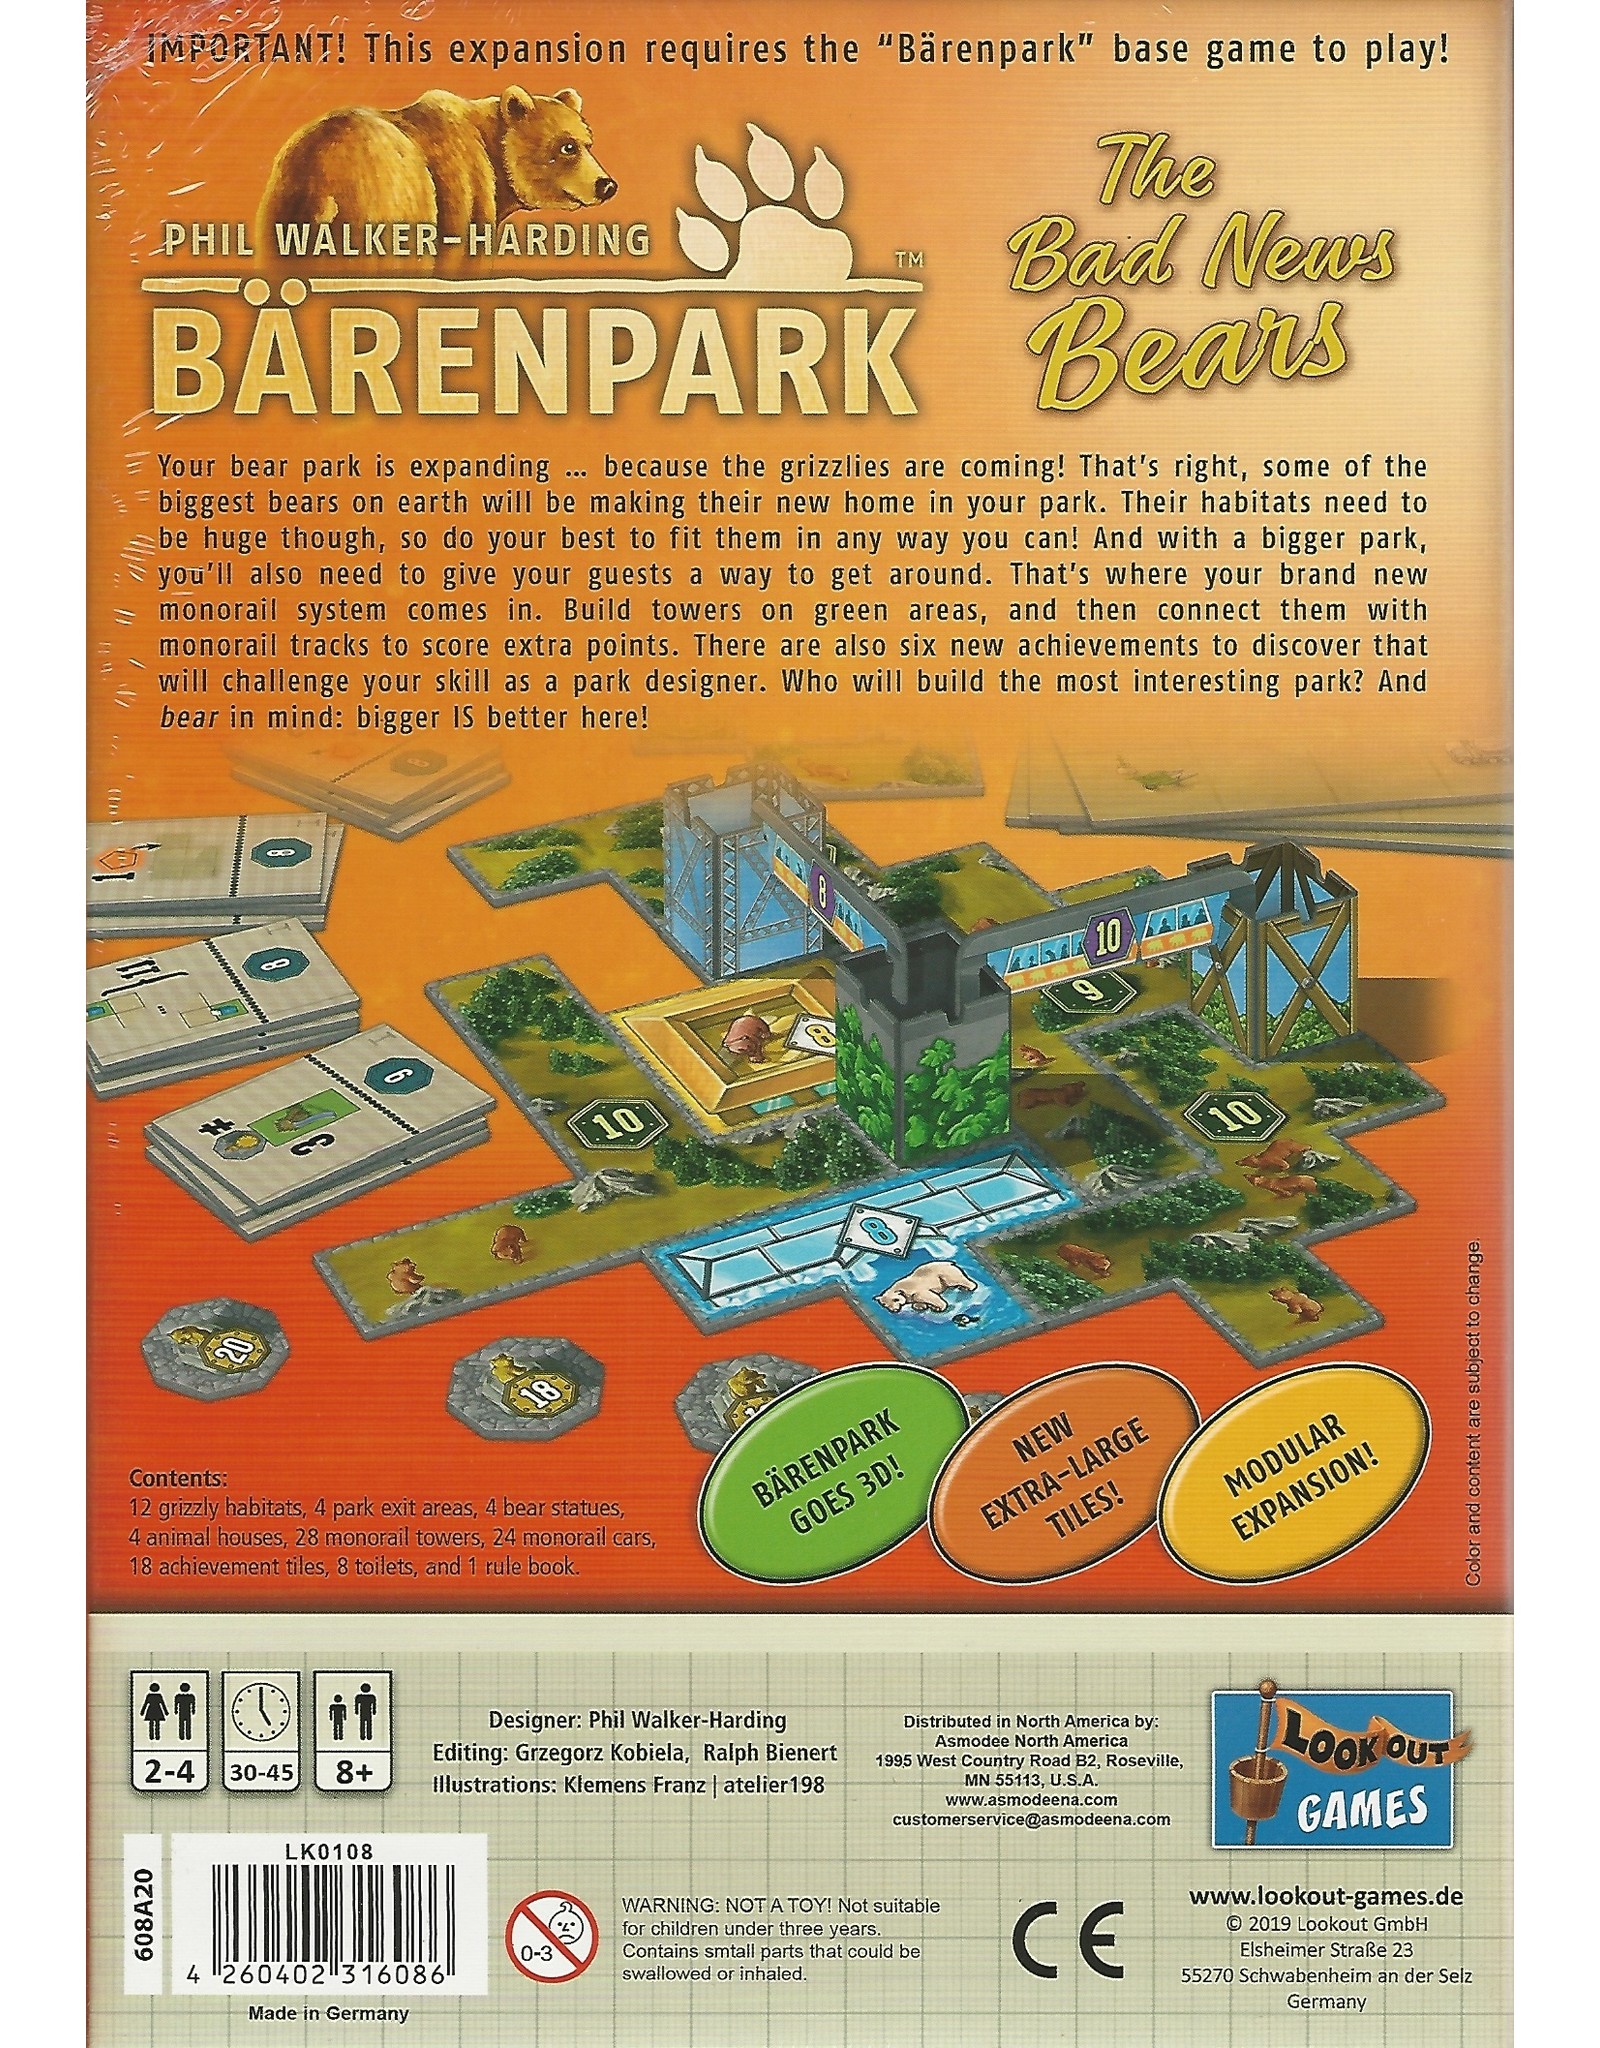 Barenpark: The Bad News Bears - Expansion